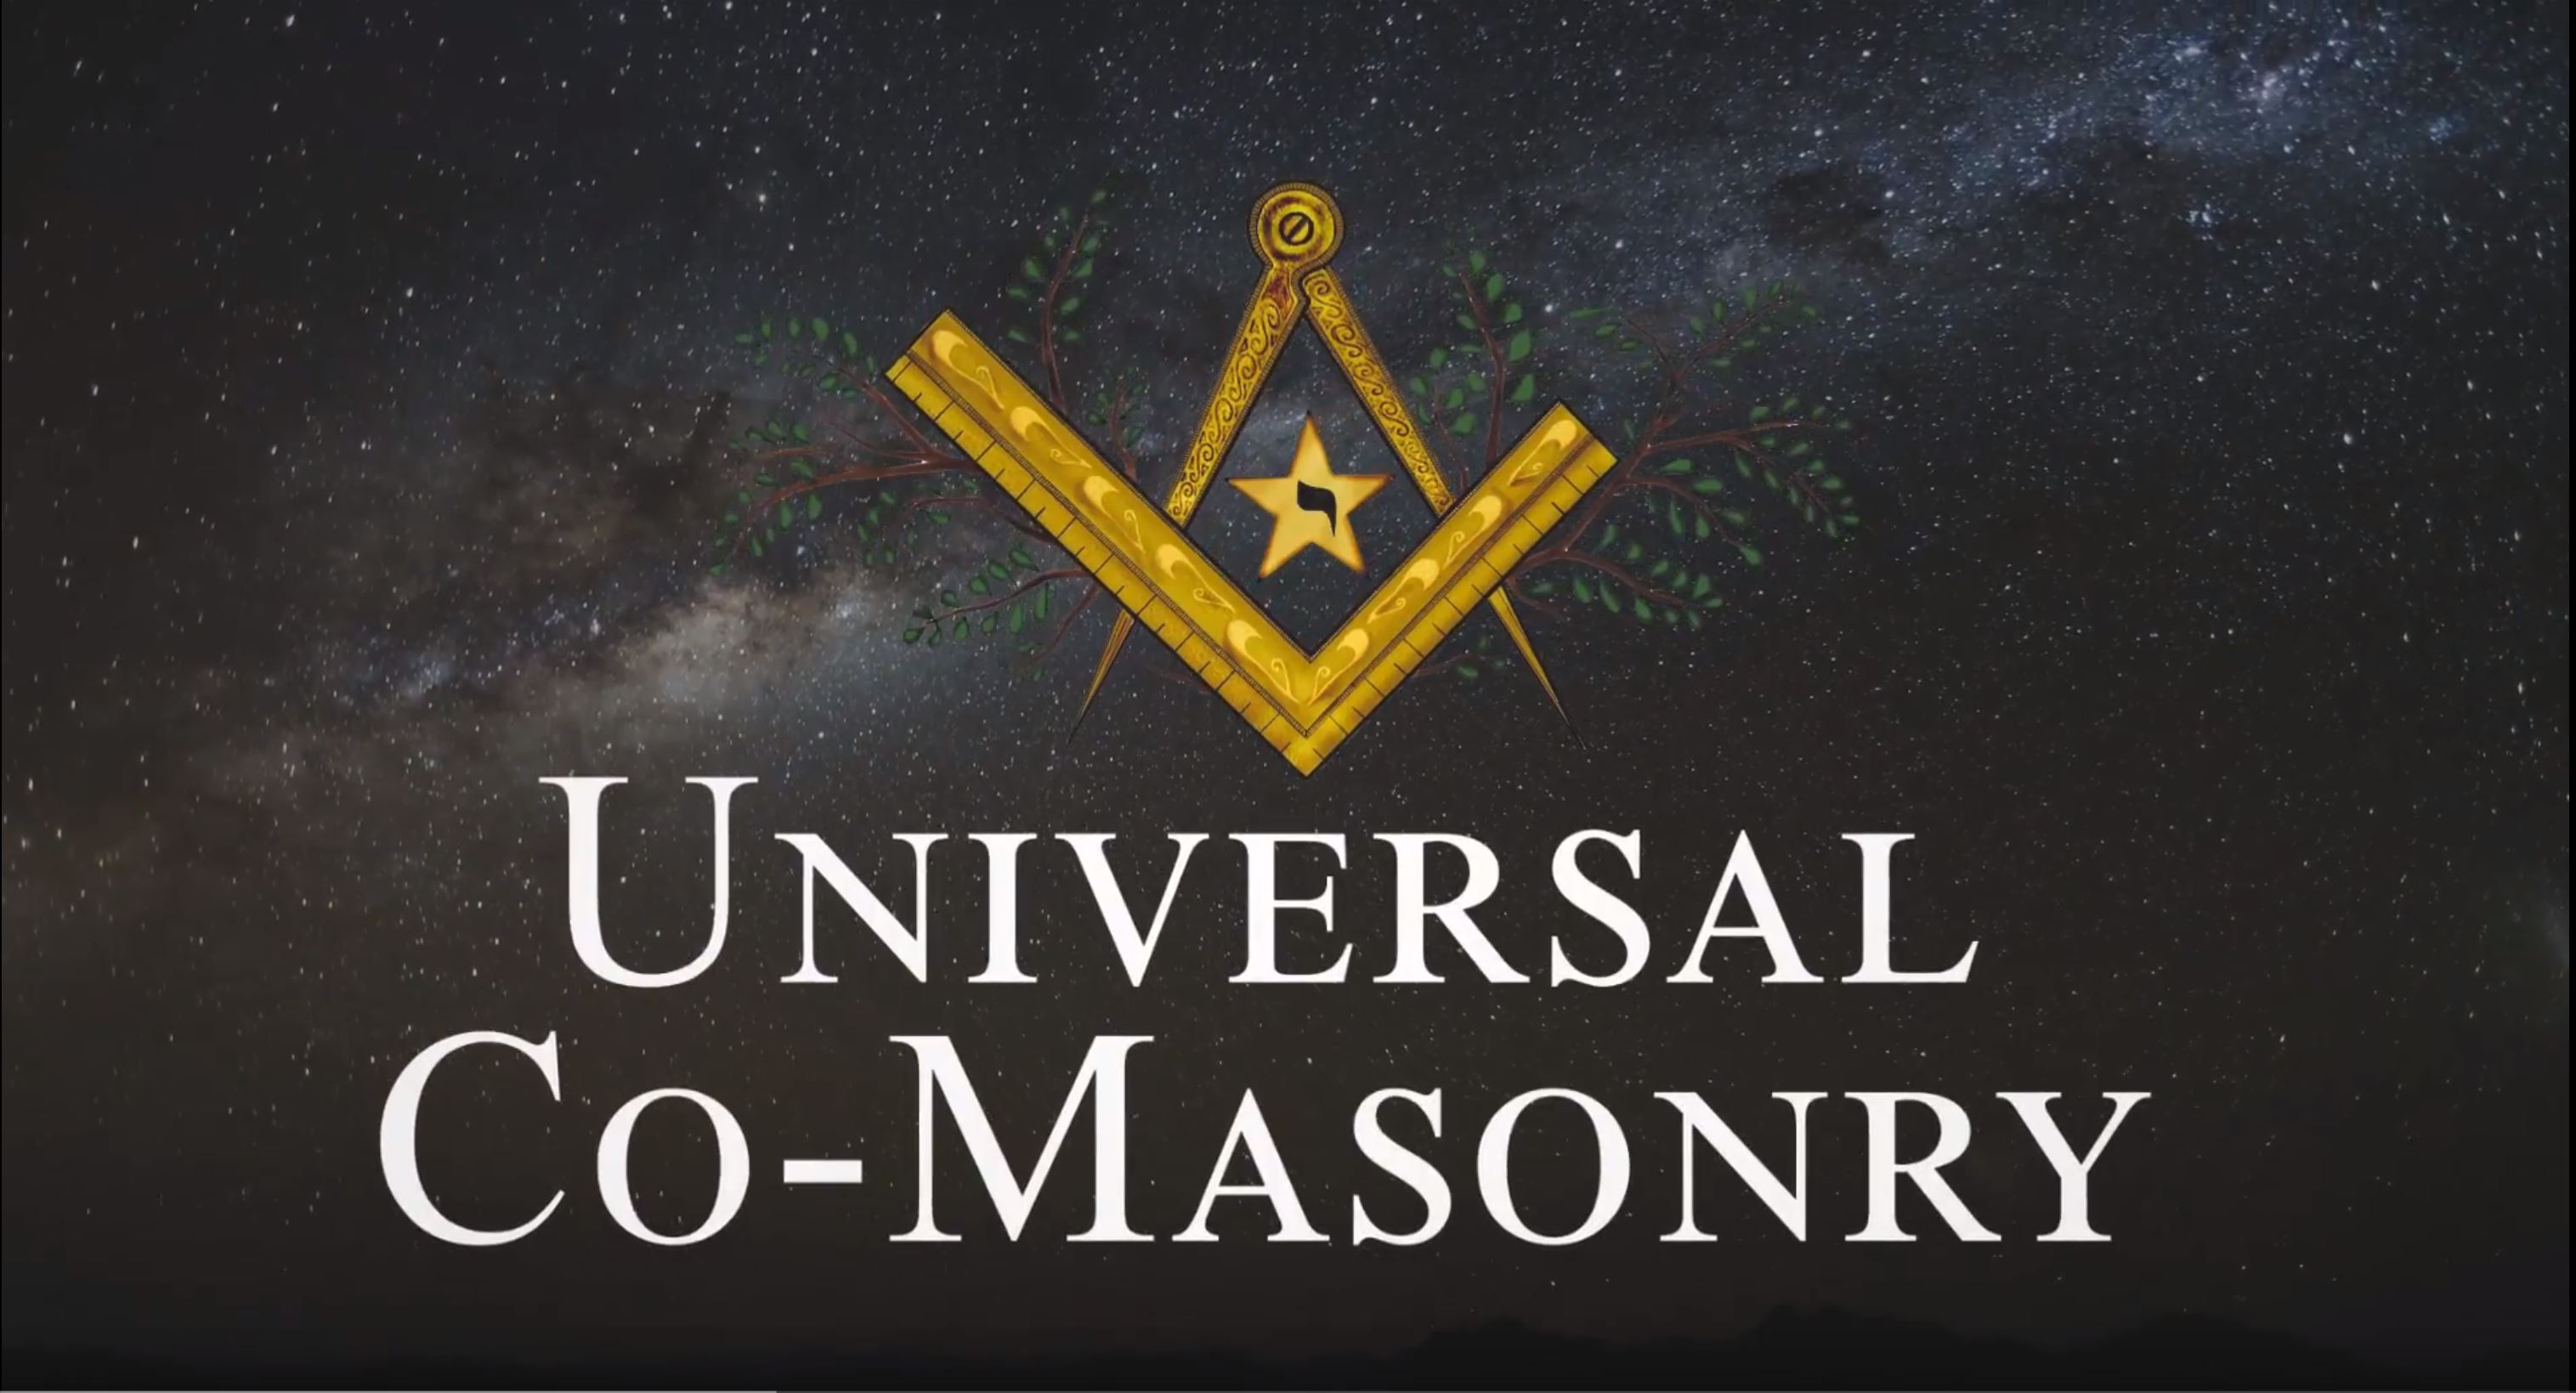 What Is Universal Co-Masonry?